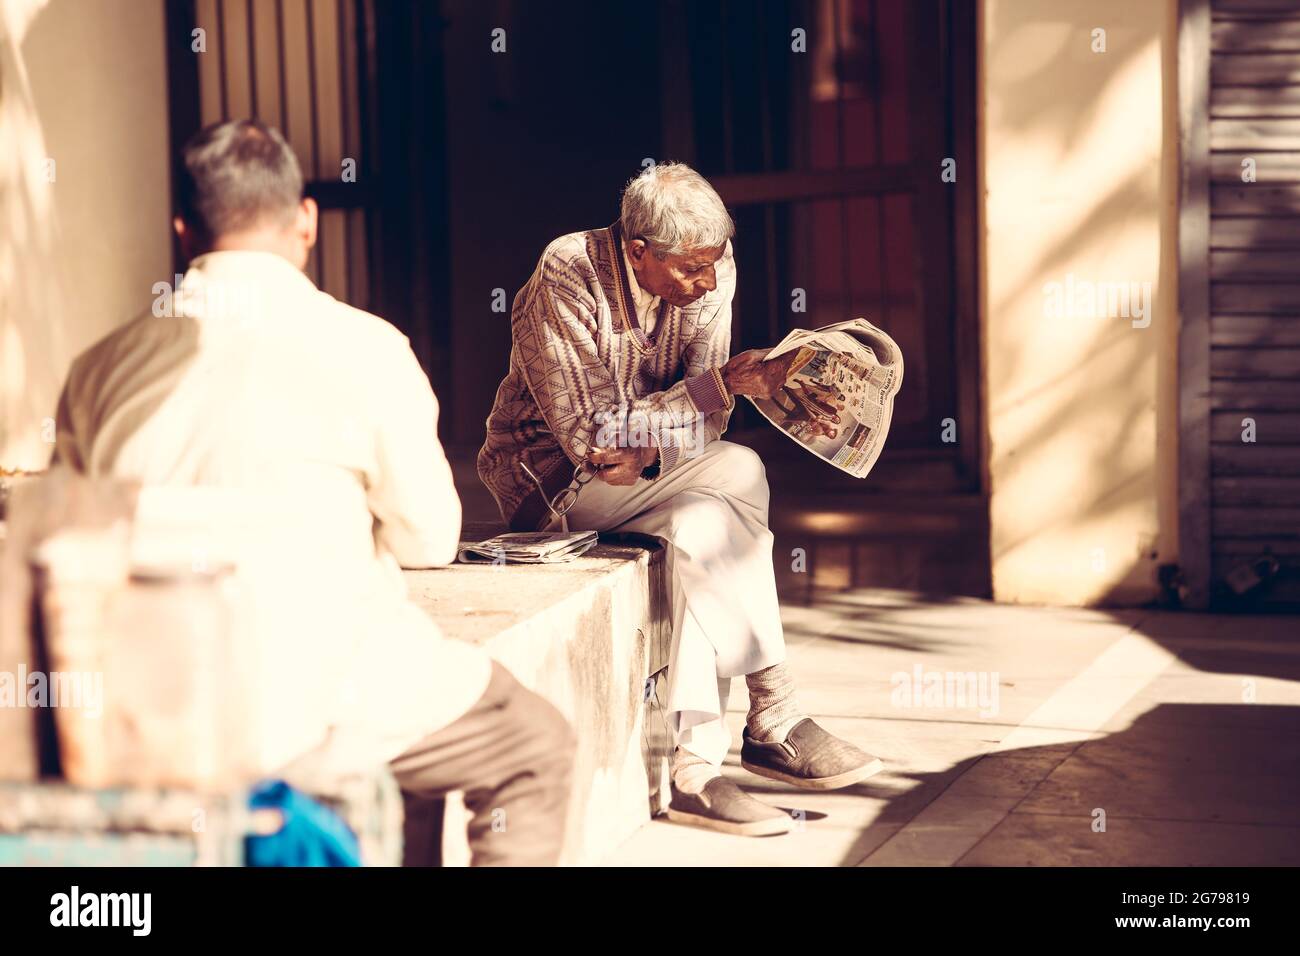 Man reads newspaper Stock Photo